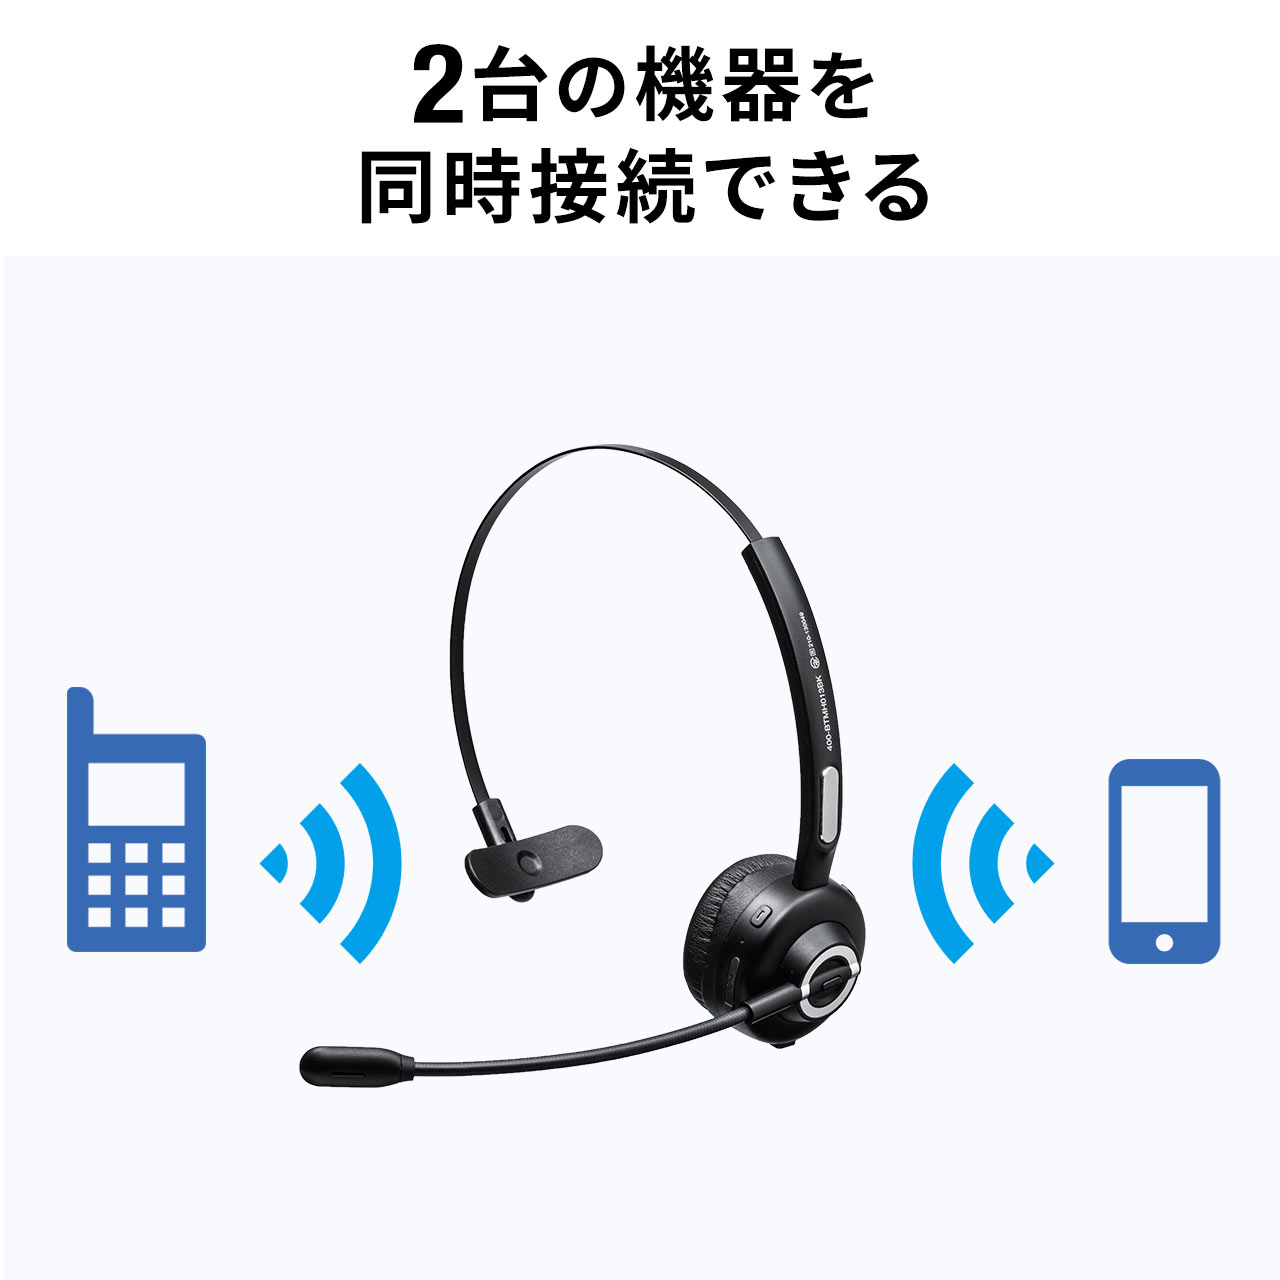 Bluetoothヘッドセット 片耳タイプ 単一指向性 充電台付き 在宅勤務 テレワーク Windows Mac 両耳対応 2台同時接続 軽量 USB 無線 400-BTMH013BK